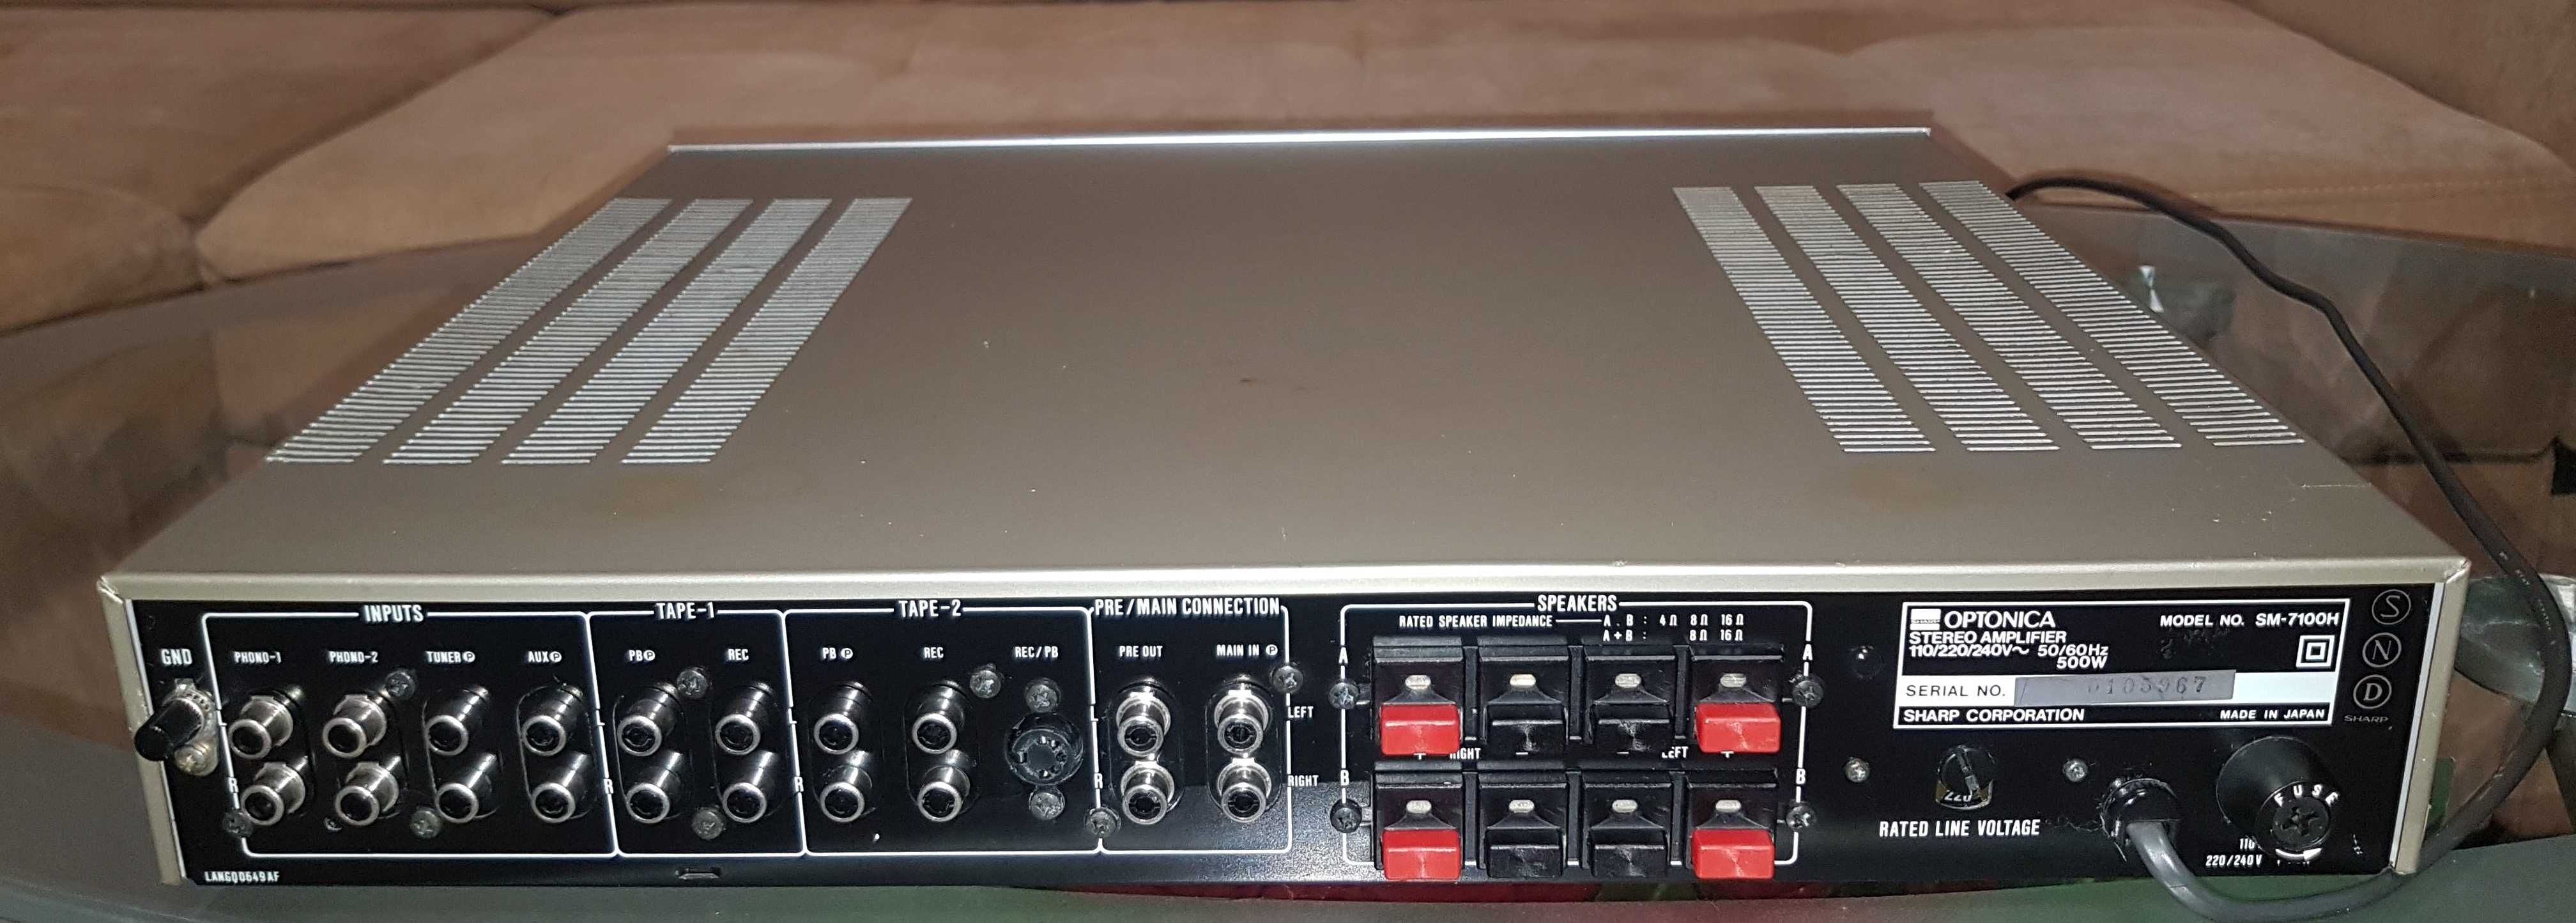 Усилитель Optonica SM-7100H integrated stereo made in Japan